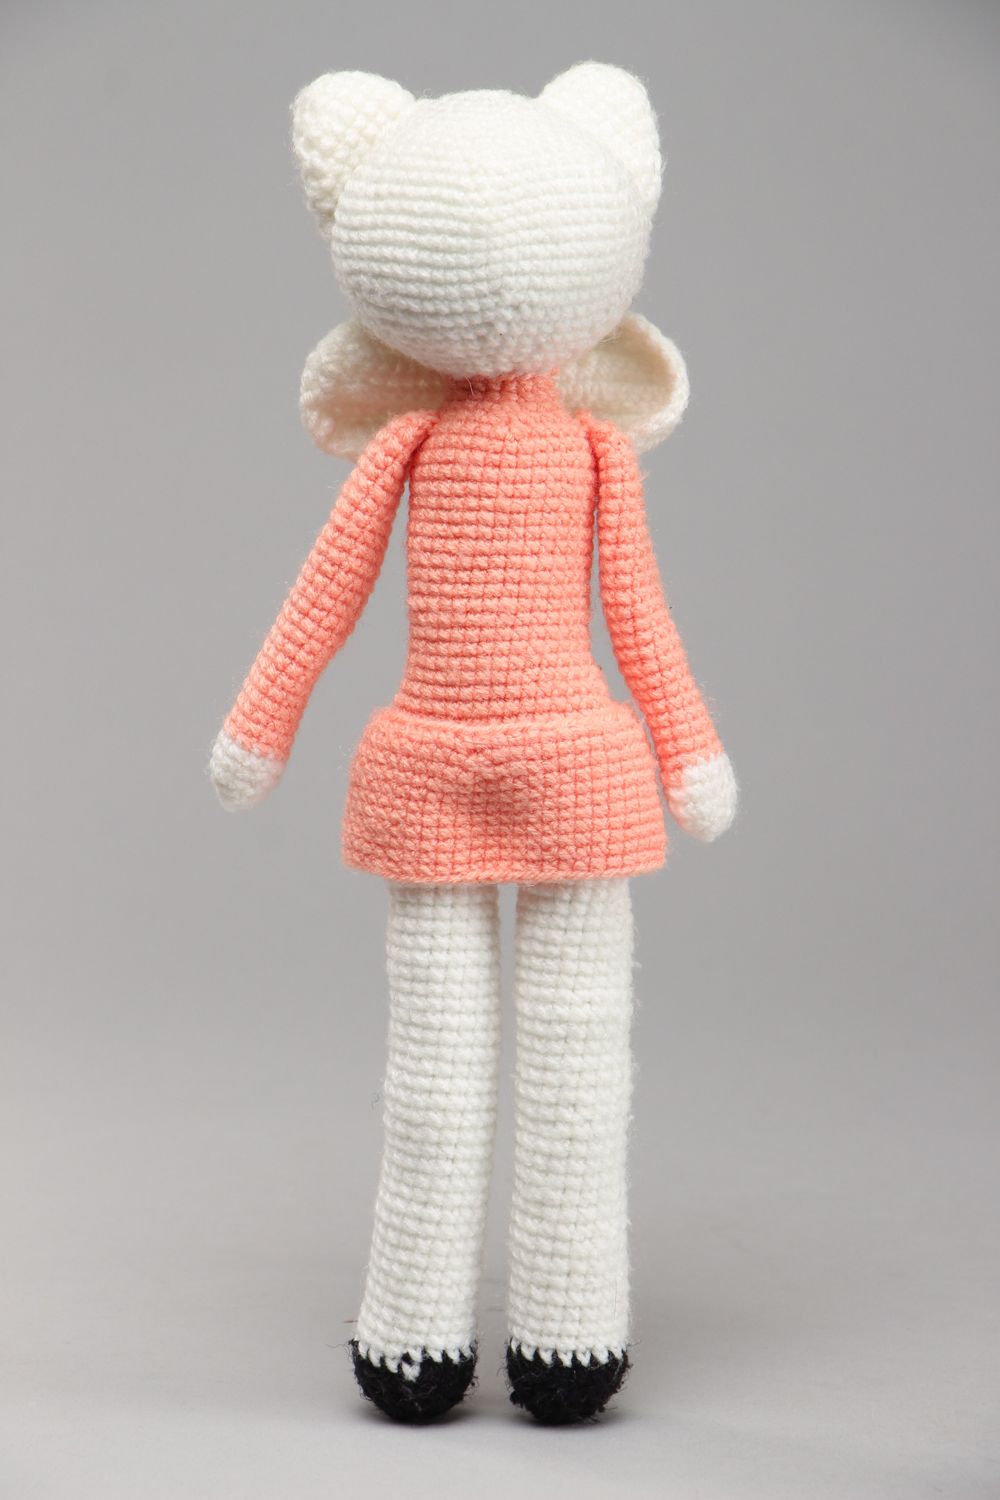 Soft crochet amigurumi toy Kitty photo 3